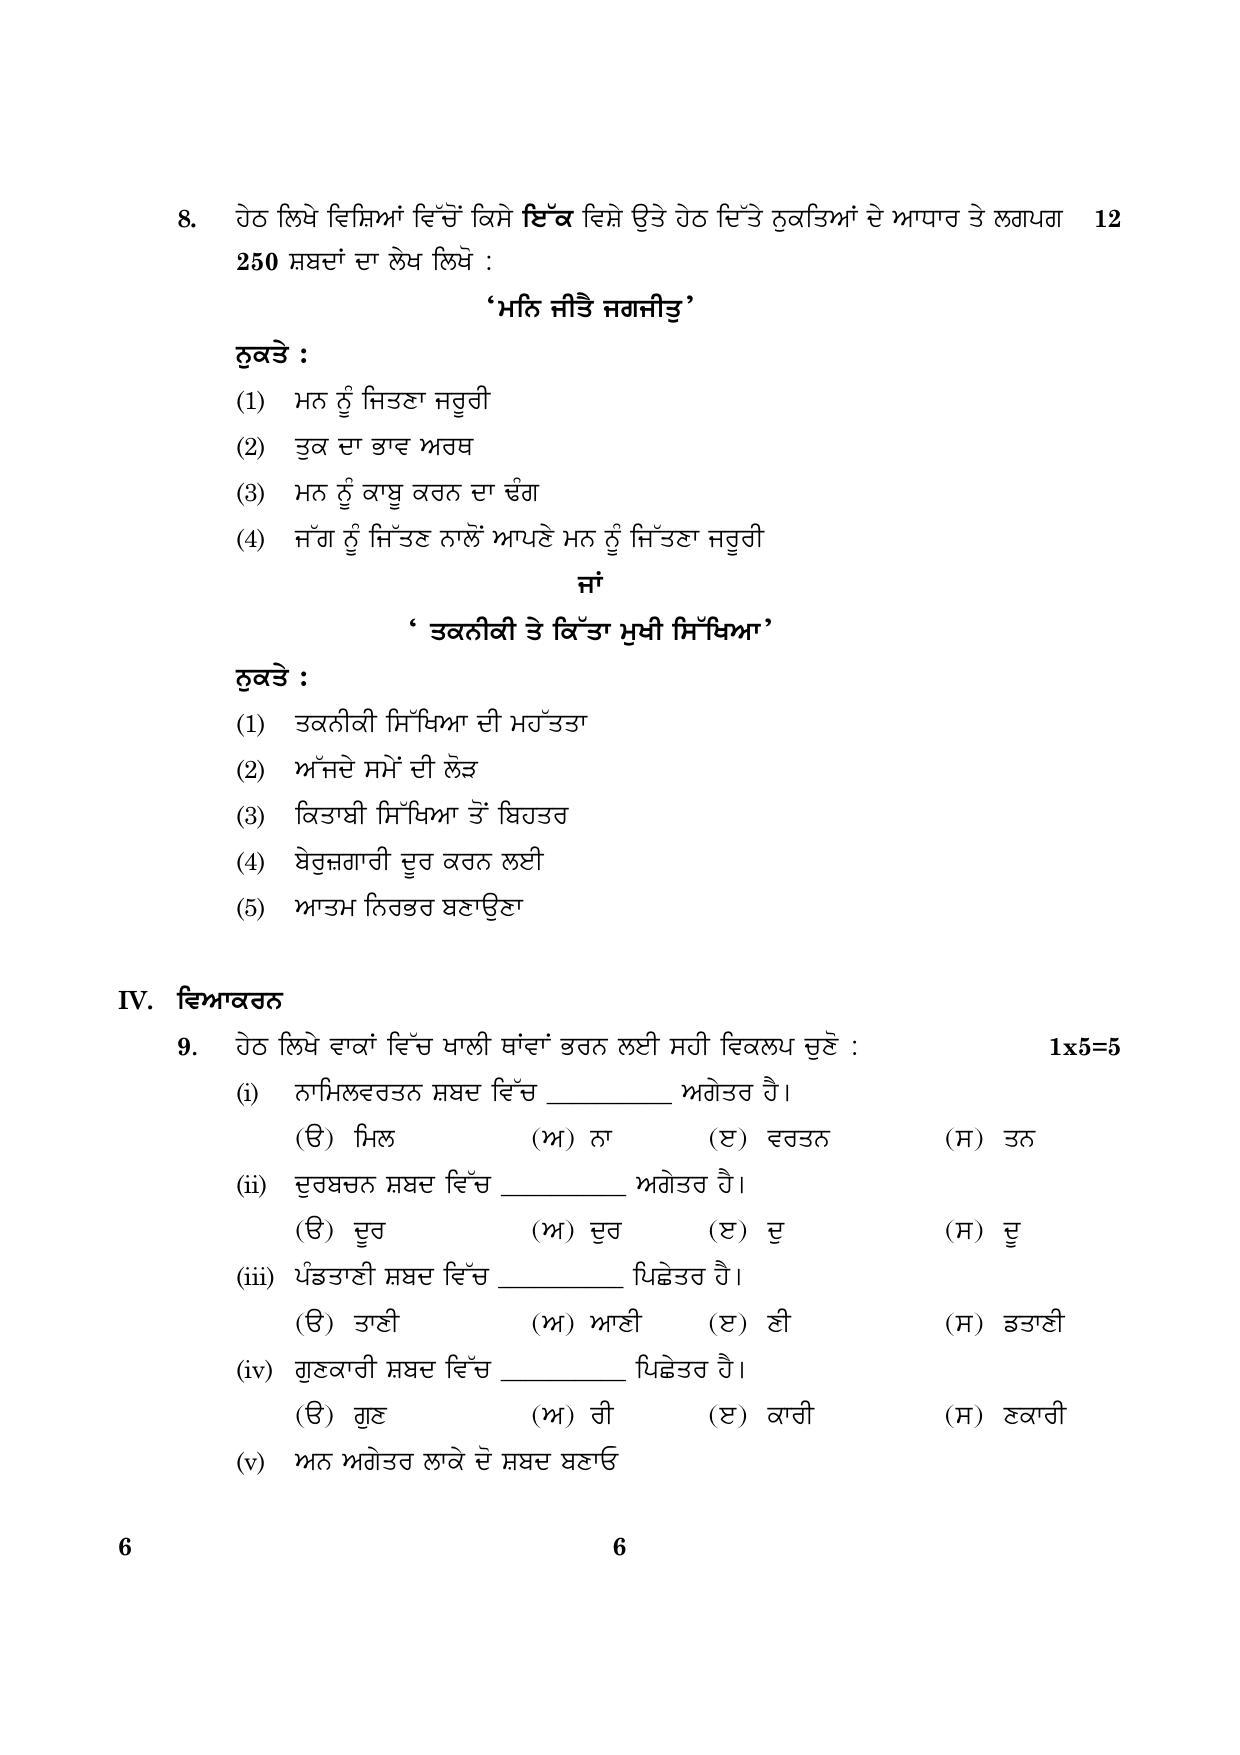 CBSE Class 10 006 Punjabi 2016 Question Paper - Page 6